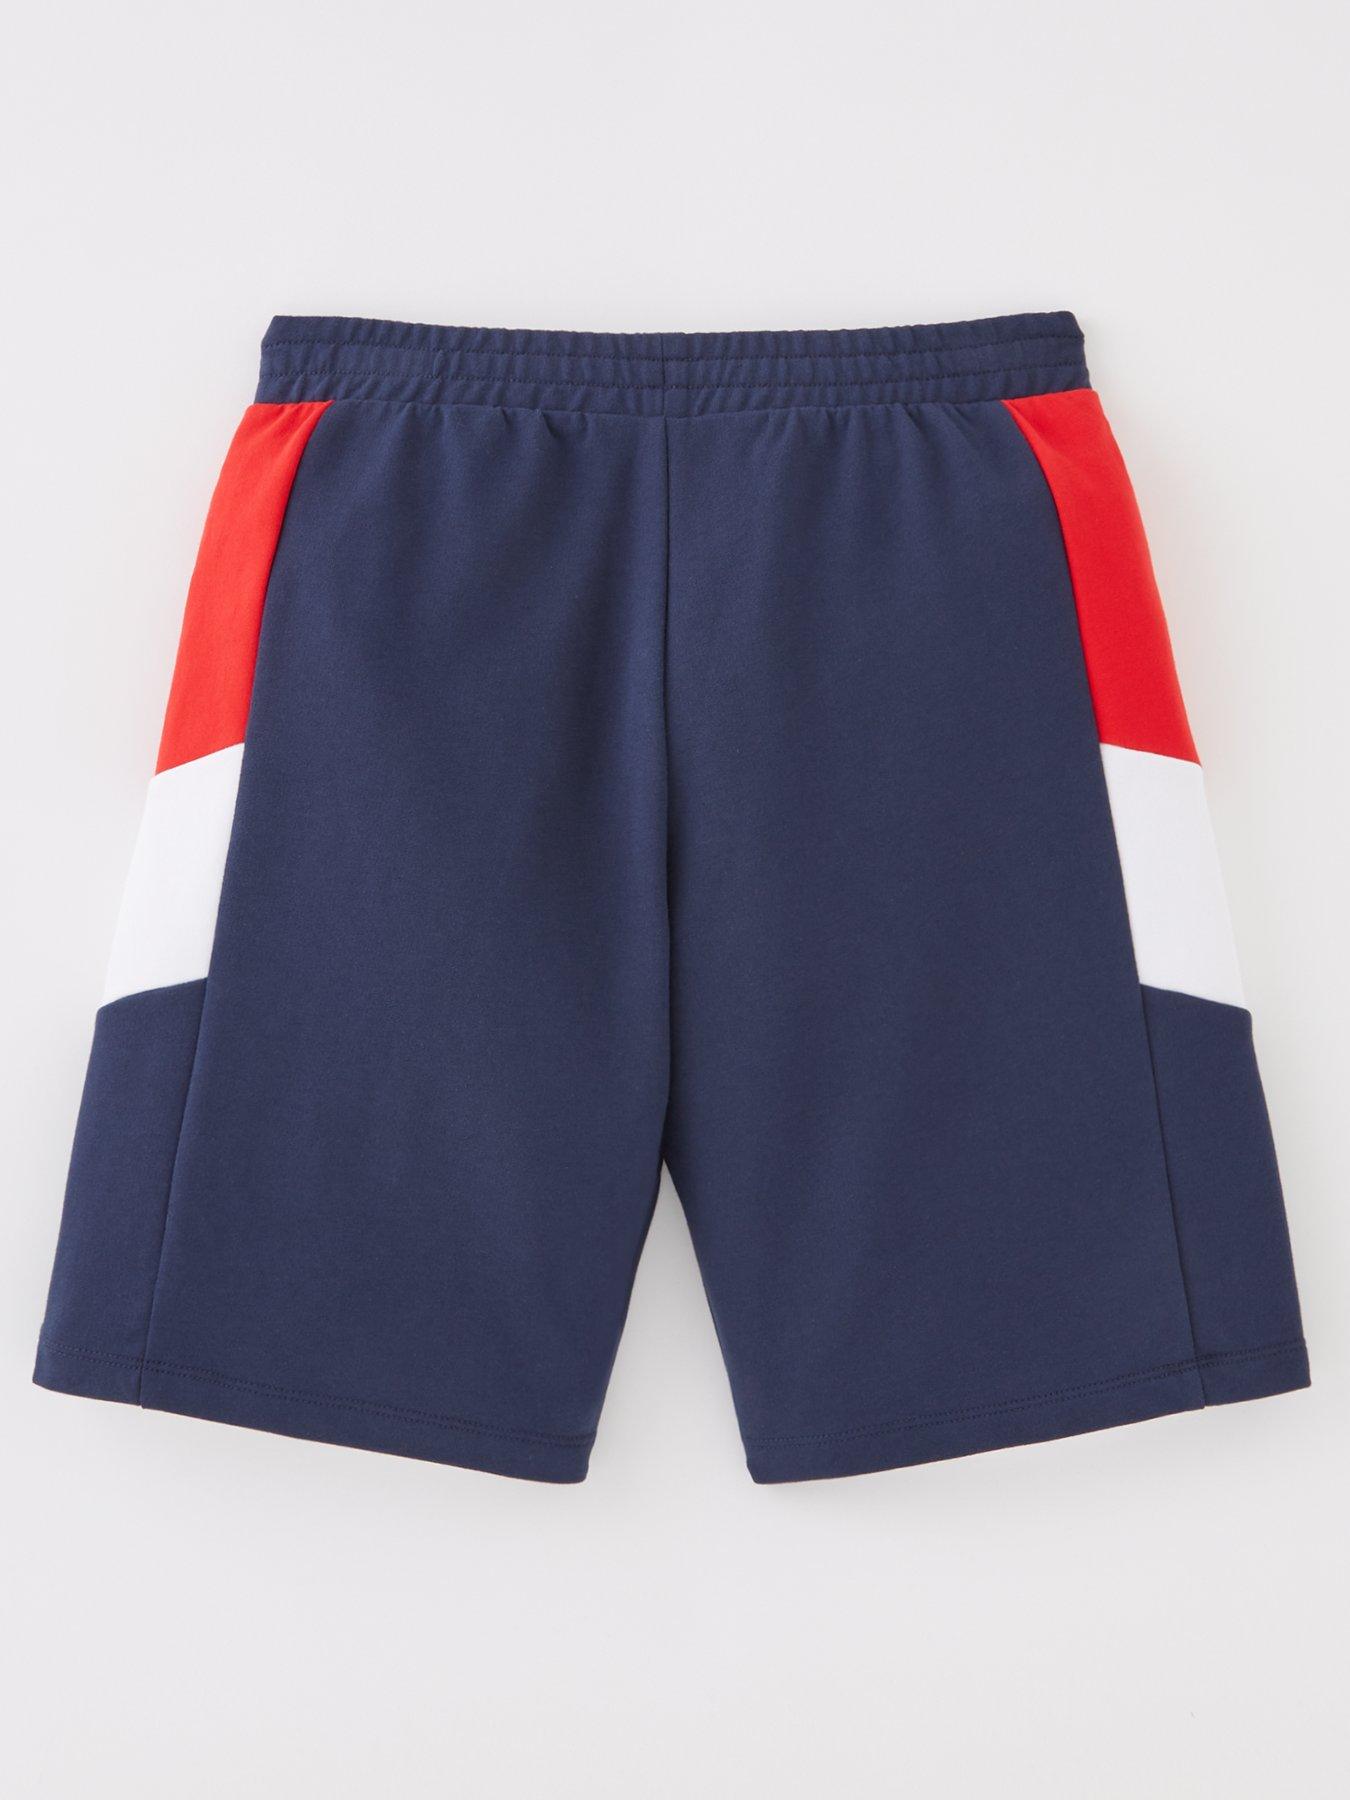 EA7 Emporio Armani Boys Colour Block Jog Shorts - Navy/White/Red |  